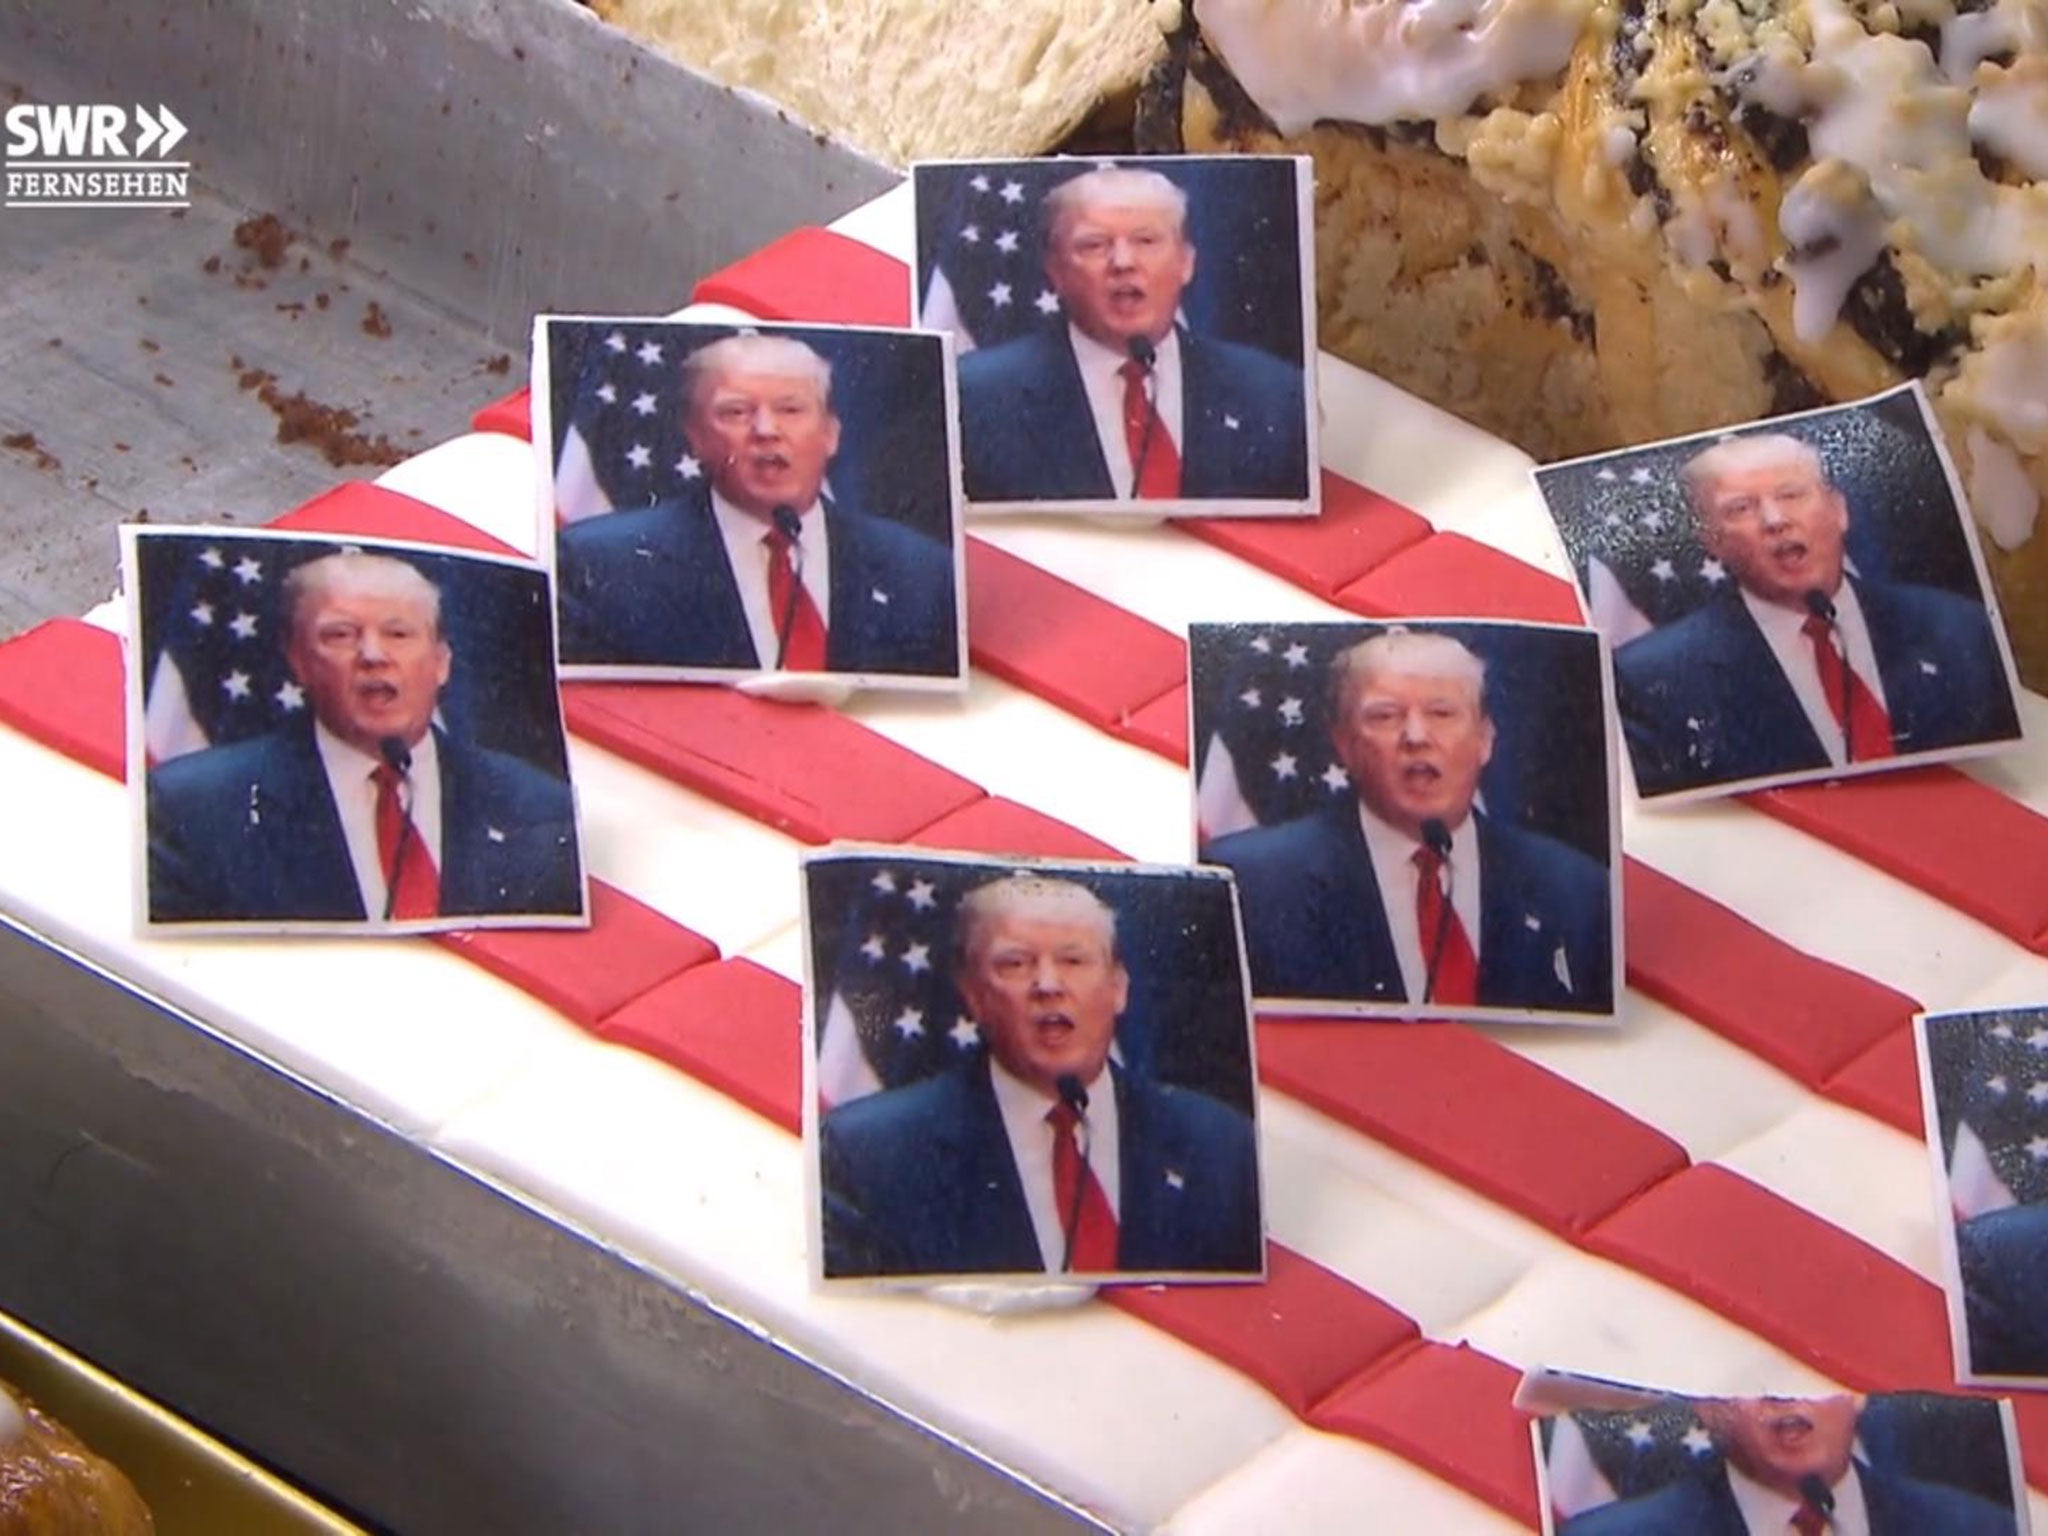 Bäckerei Trump's 'joke' cake to mark Donald Trump's inauguration prompted controversy in Freinsheim